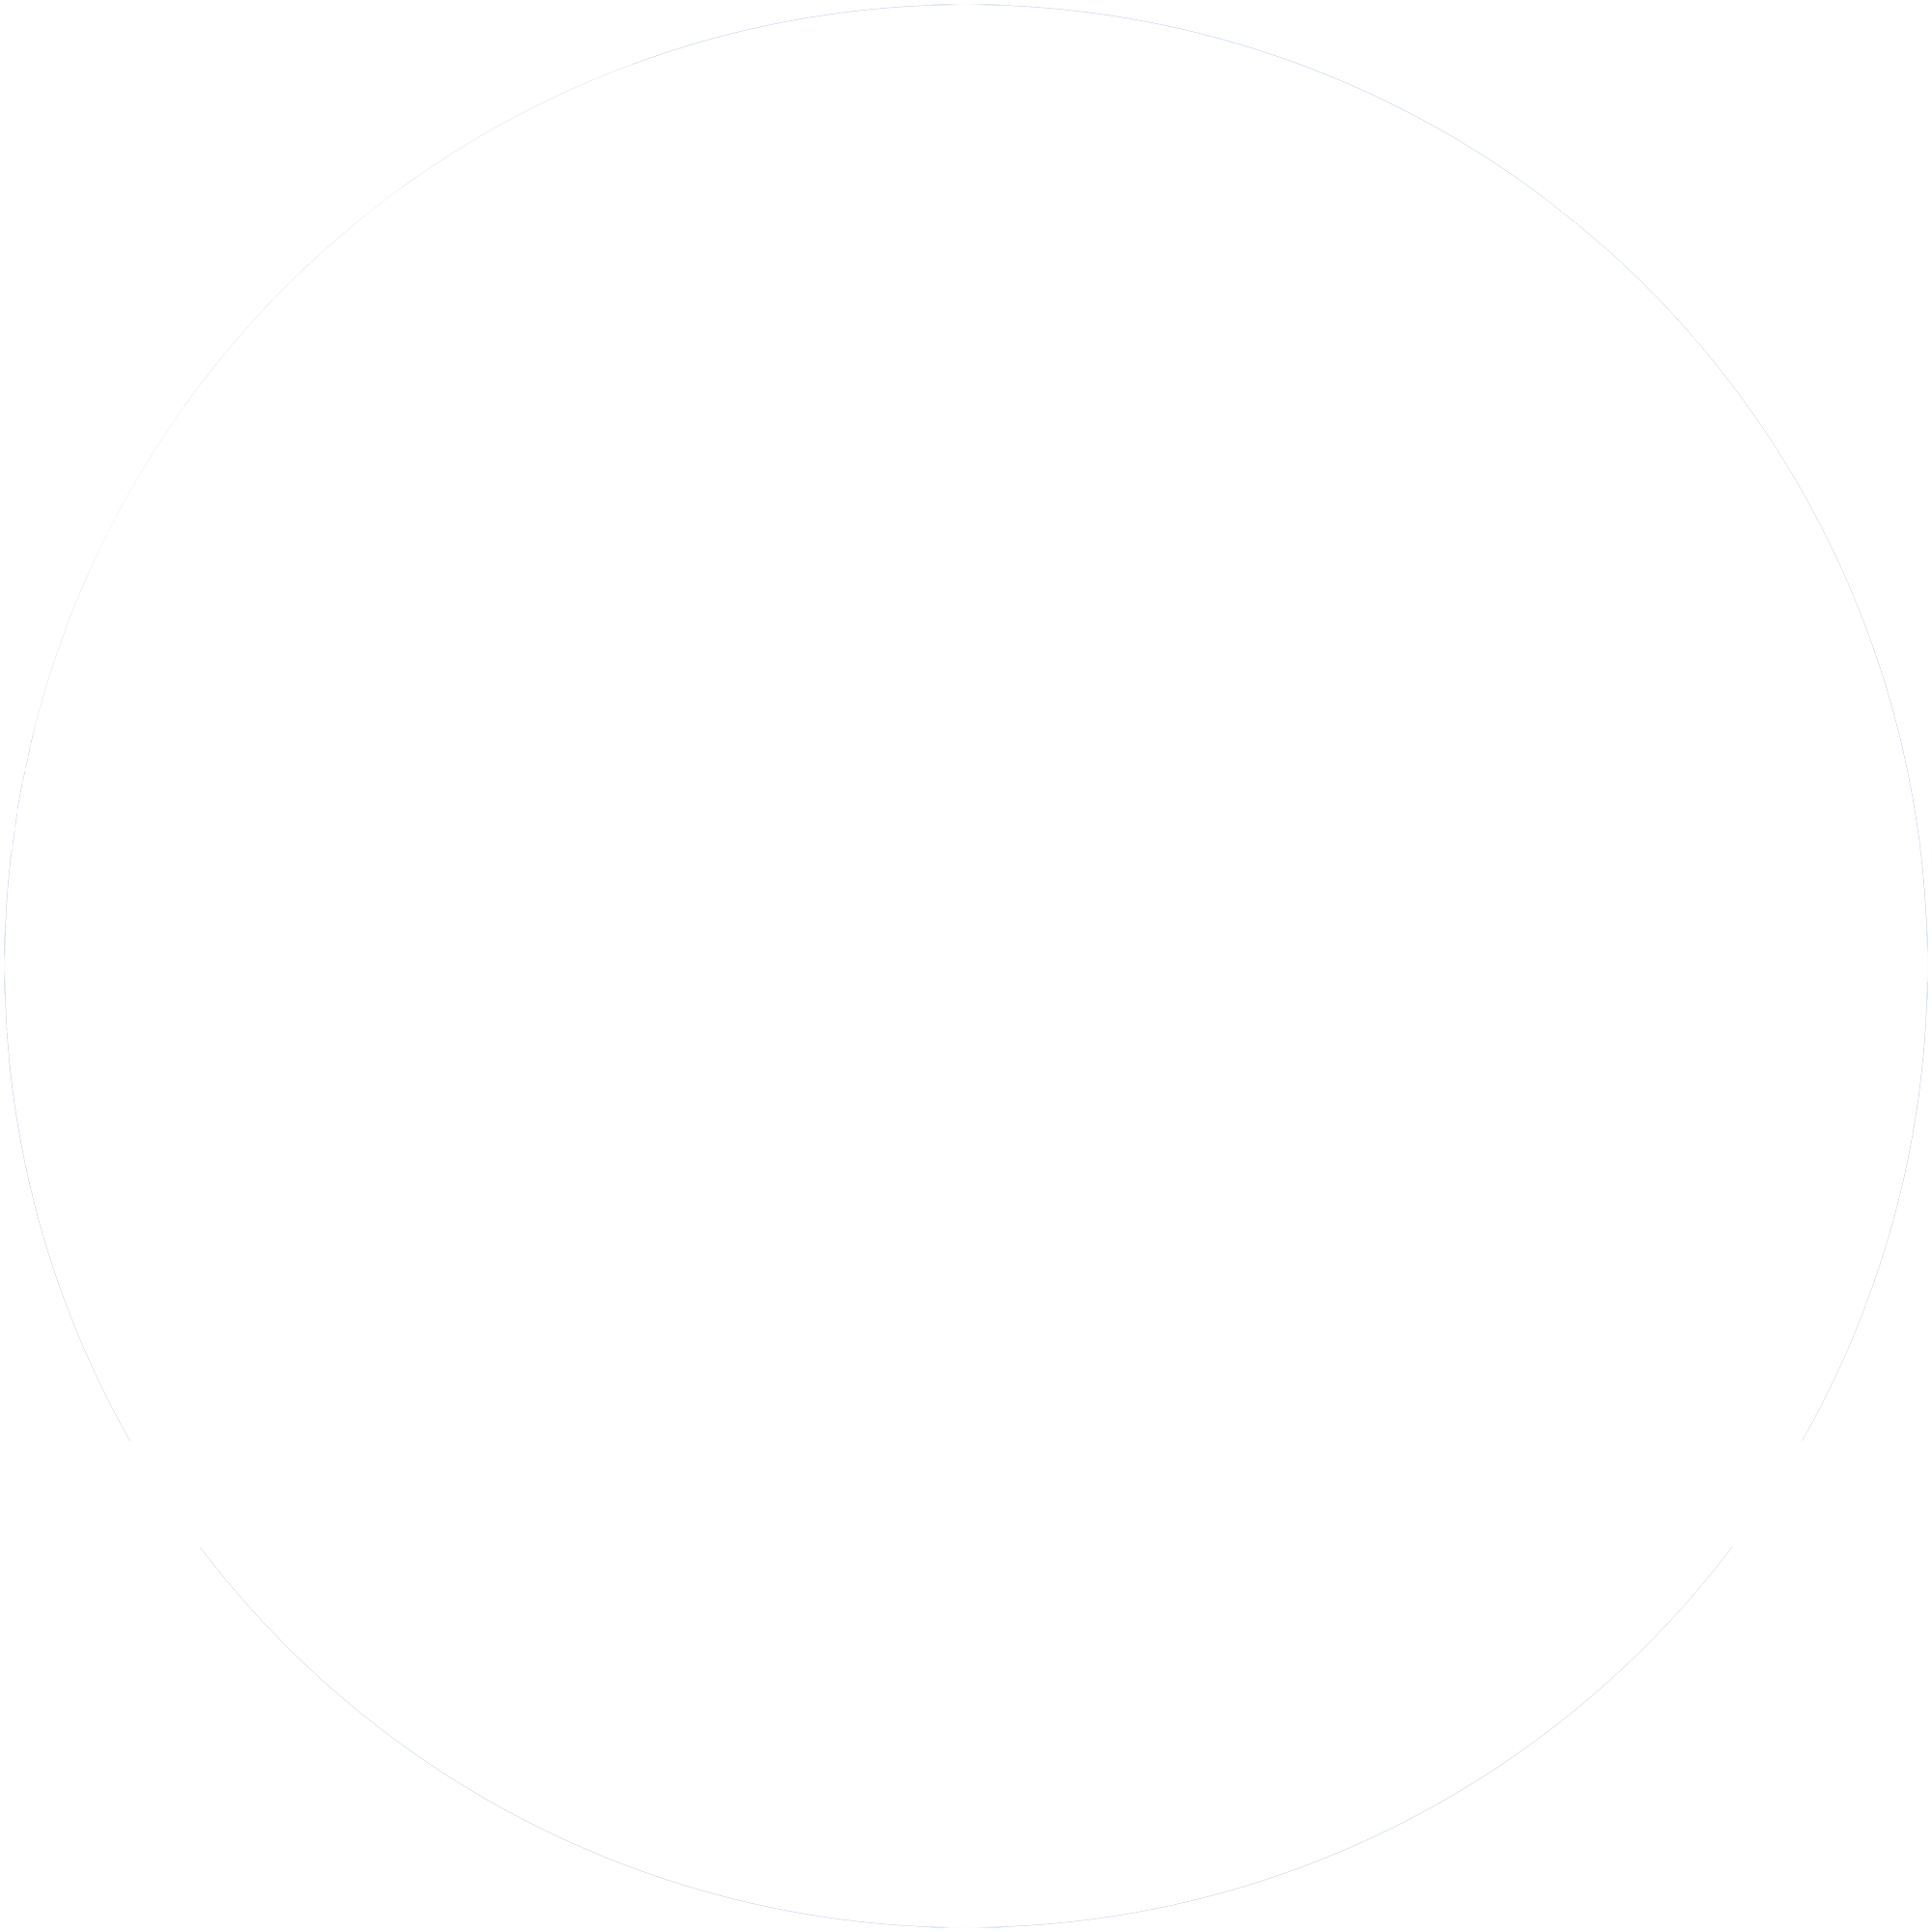 Manchester Aviation